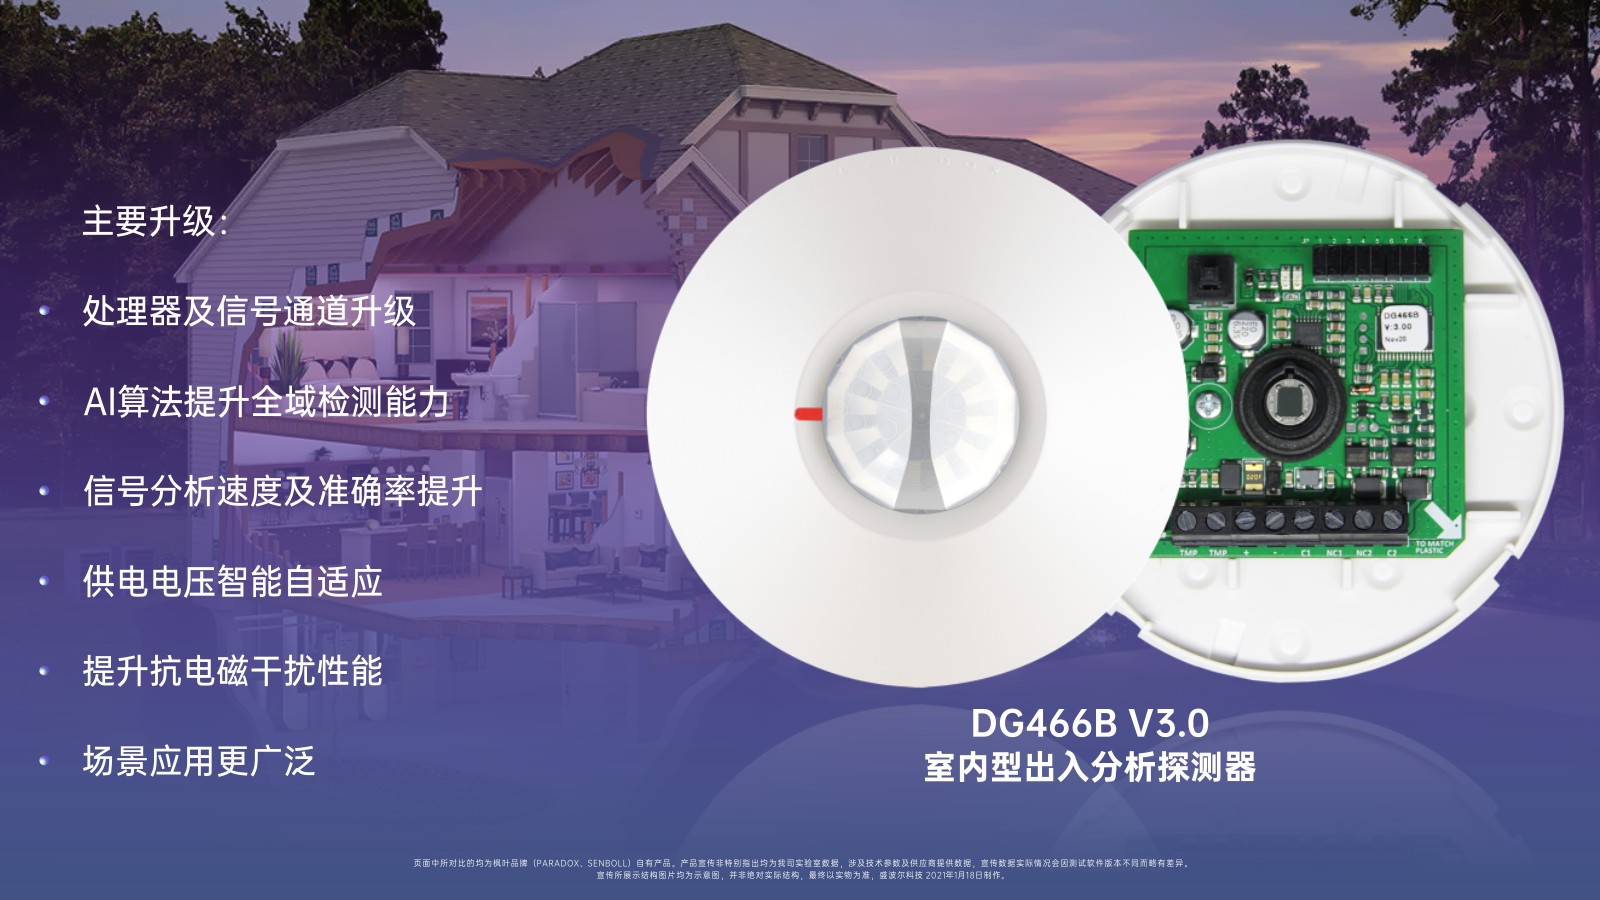  DG466B V3.0 - 室内型出入分析探测器全新上市 